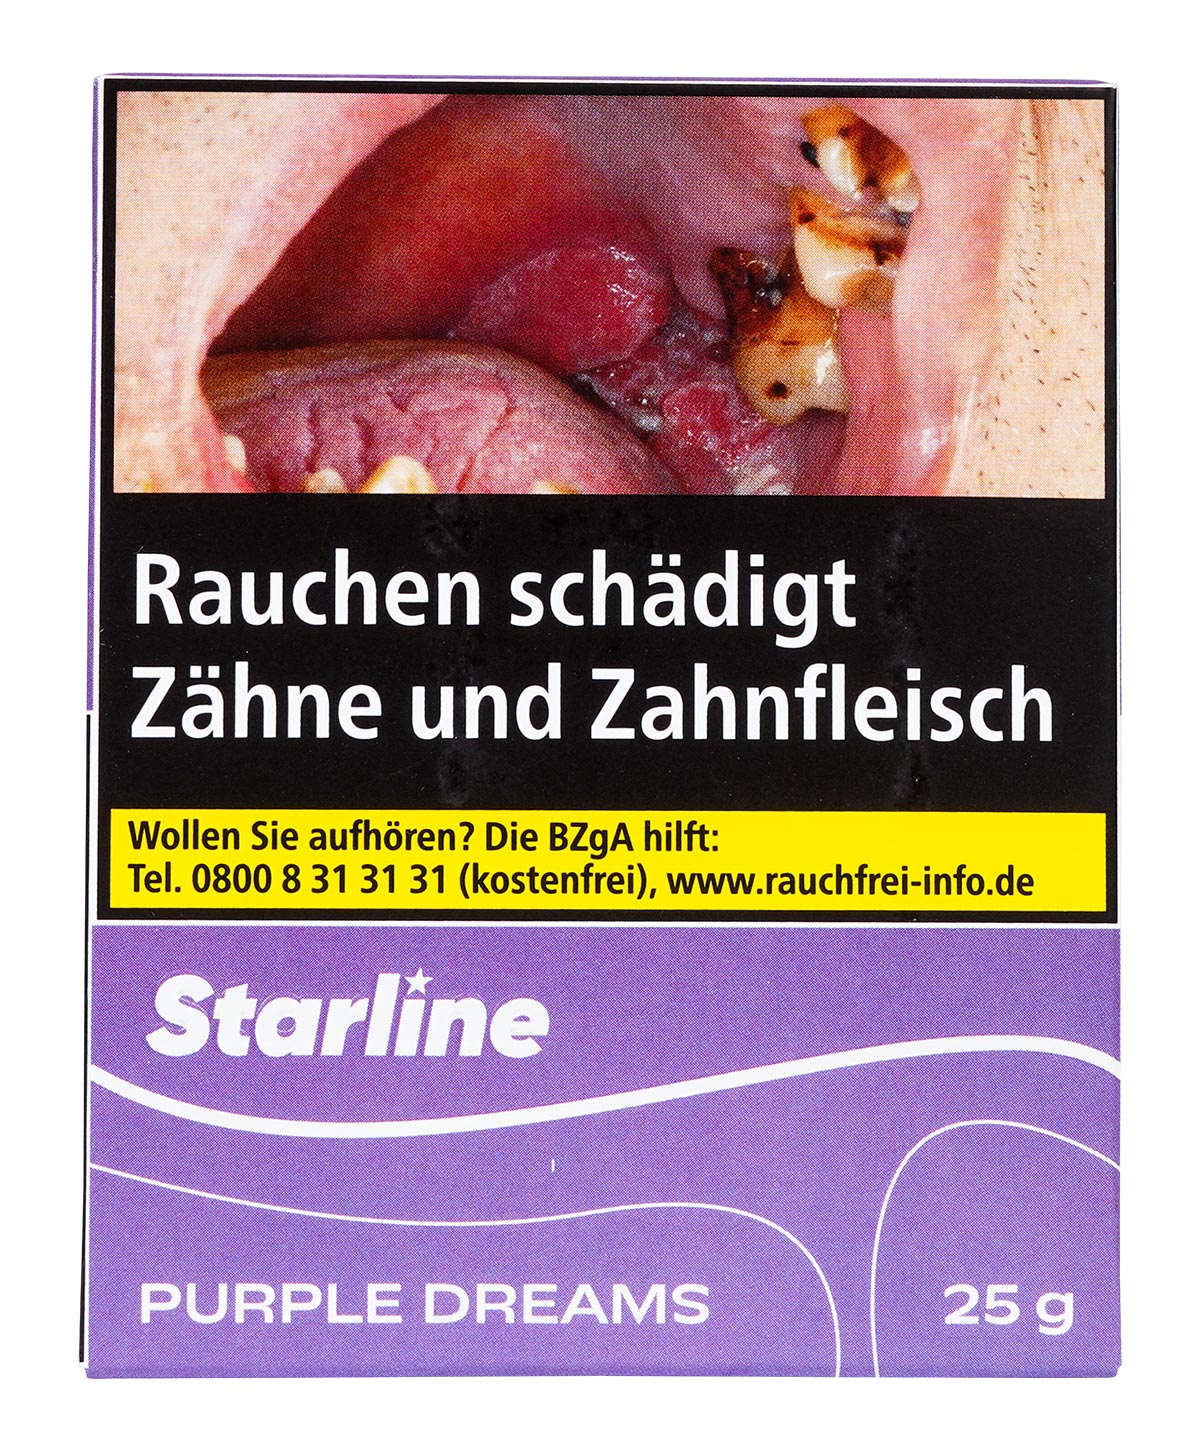 Starline Purple Dreams 25g